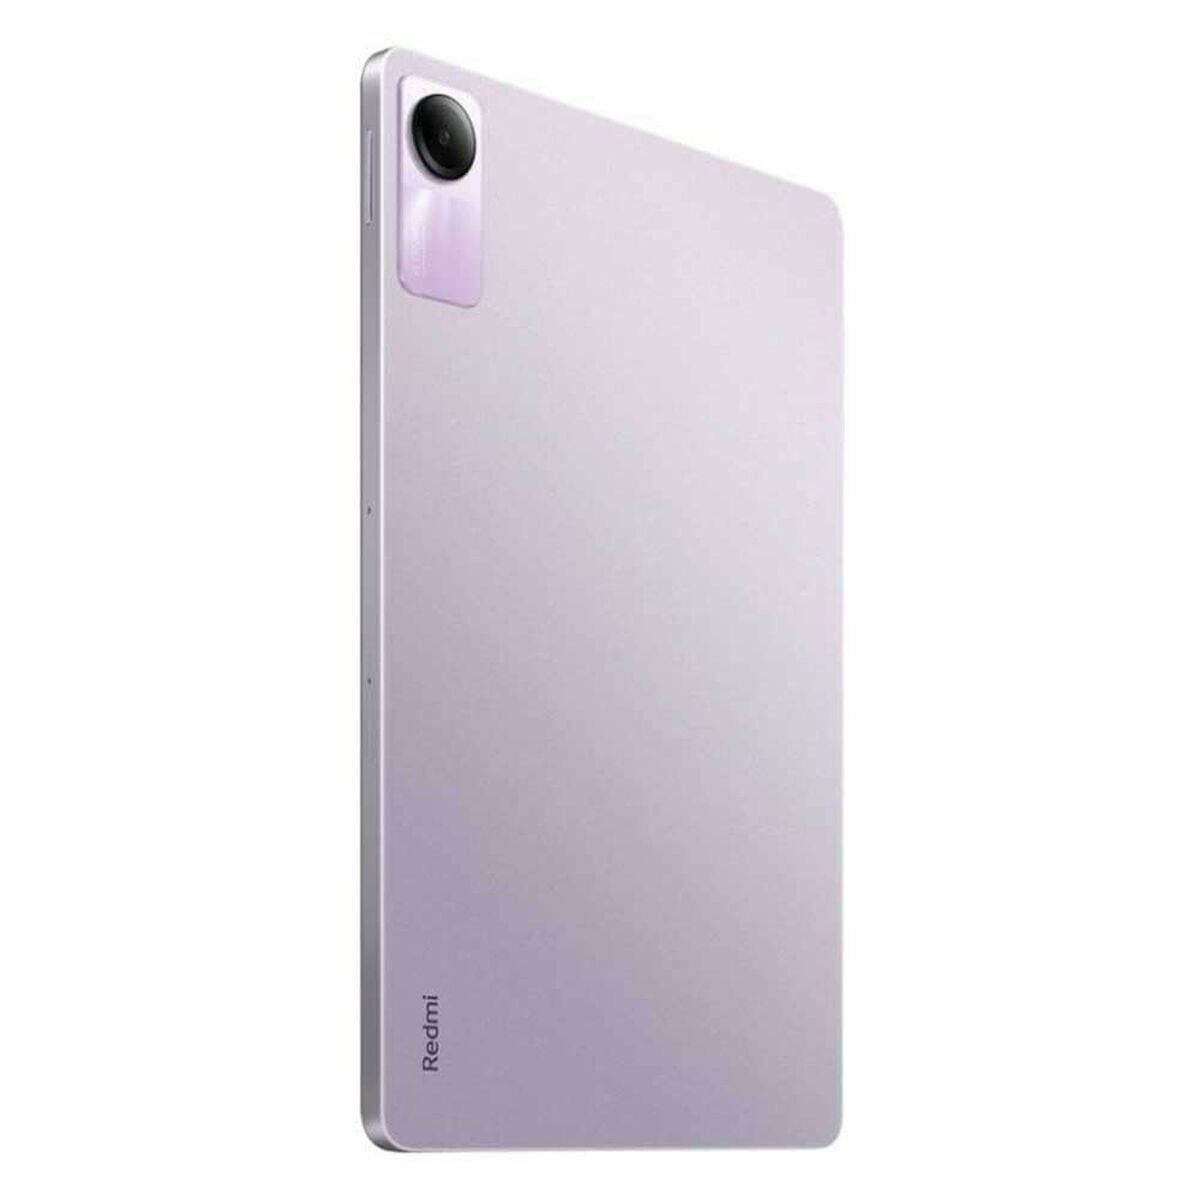 Tablet Xiaomi Redmi Pad SE 11" 8 GB RAM 256 GB Qualcomm Snapdragon 680 Purple